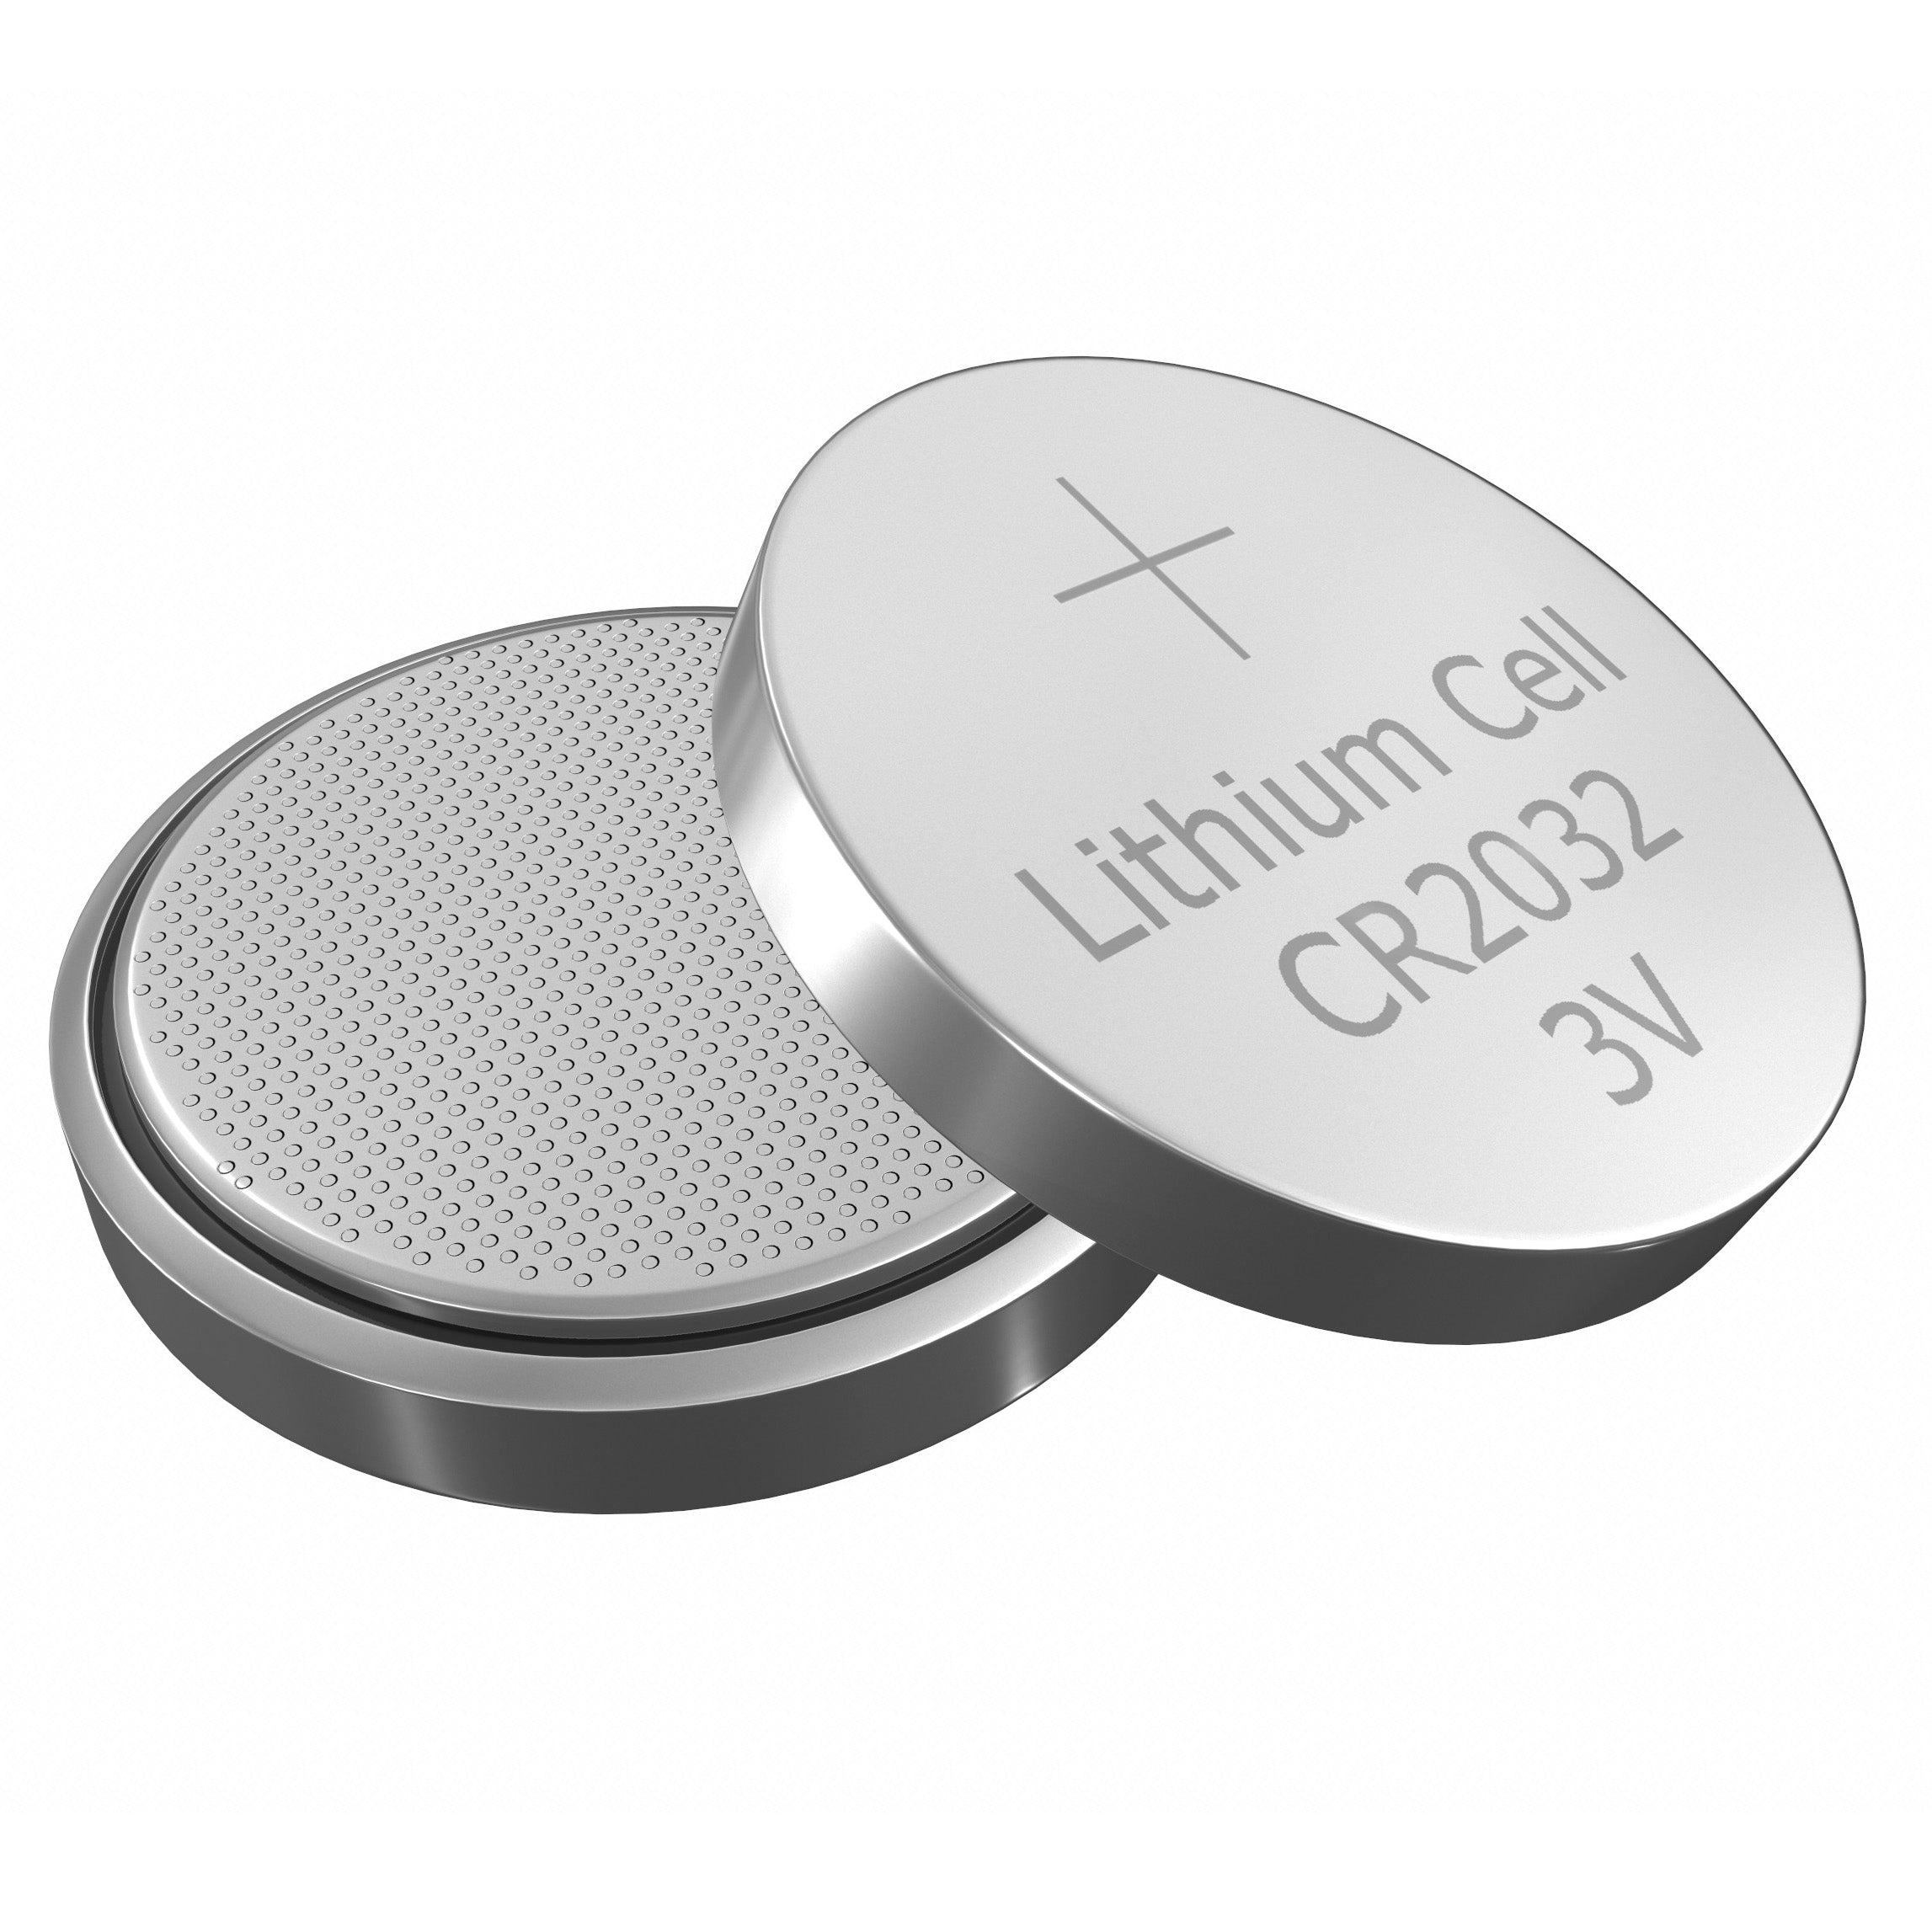 Lithium knoopcel batterij CR2032 3V kopen? |